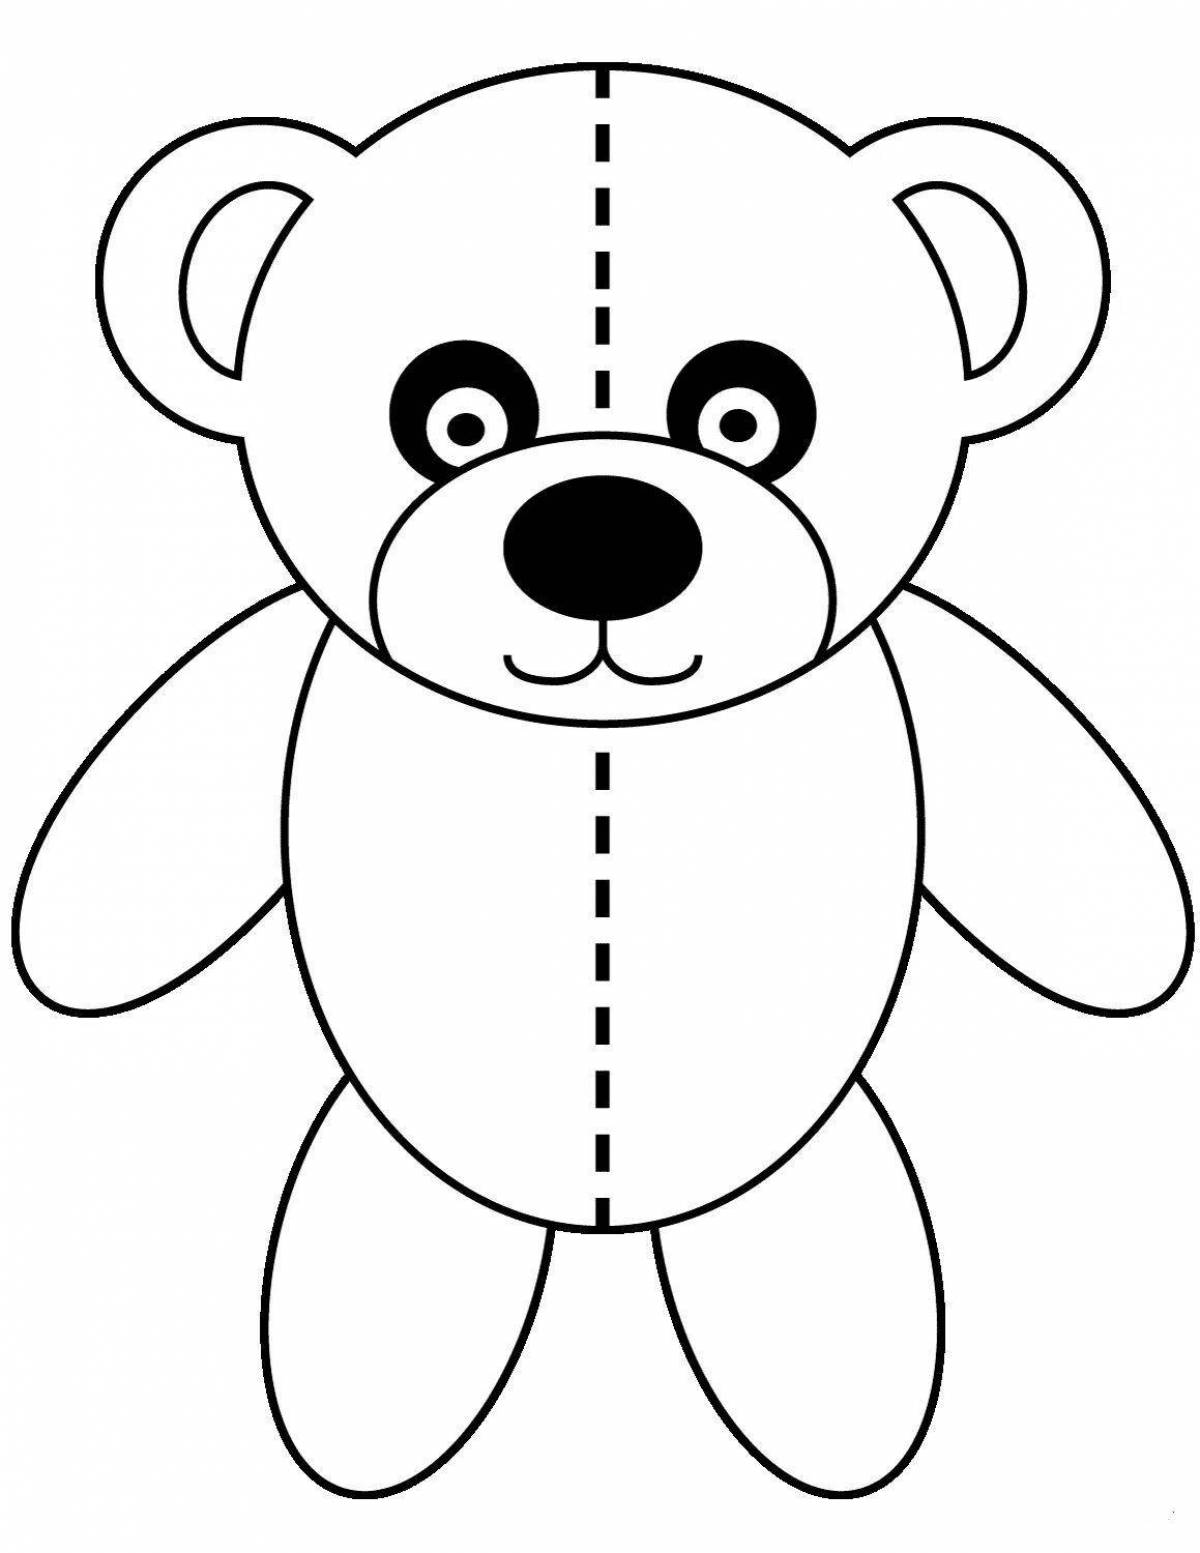 Caring bear coloring page